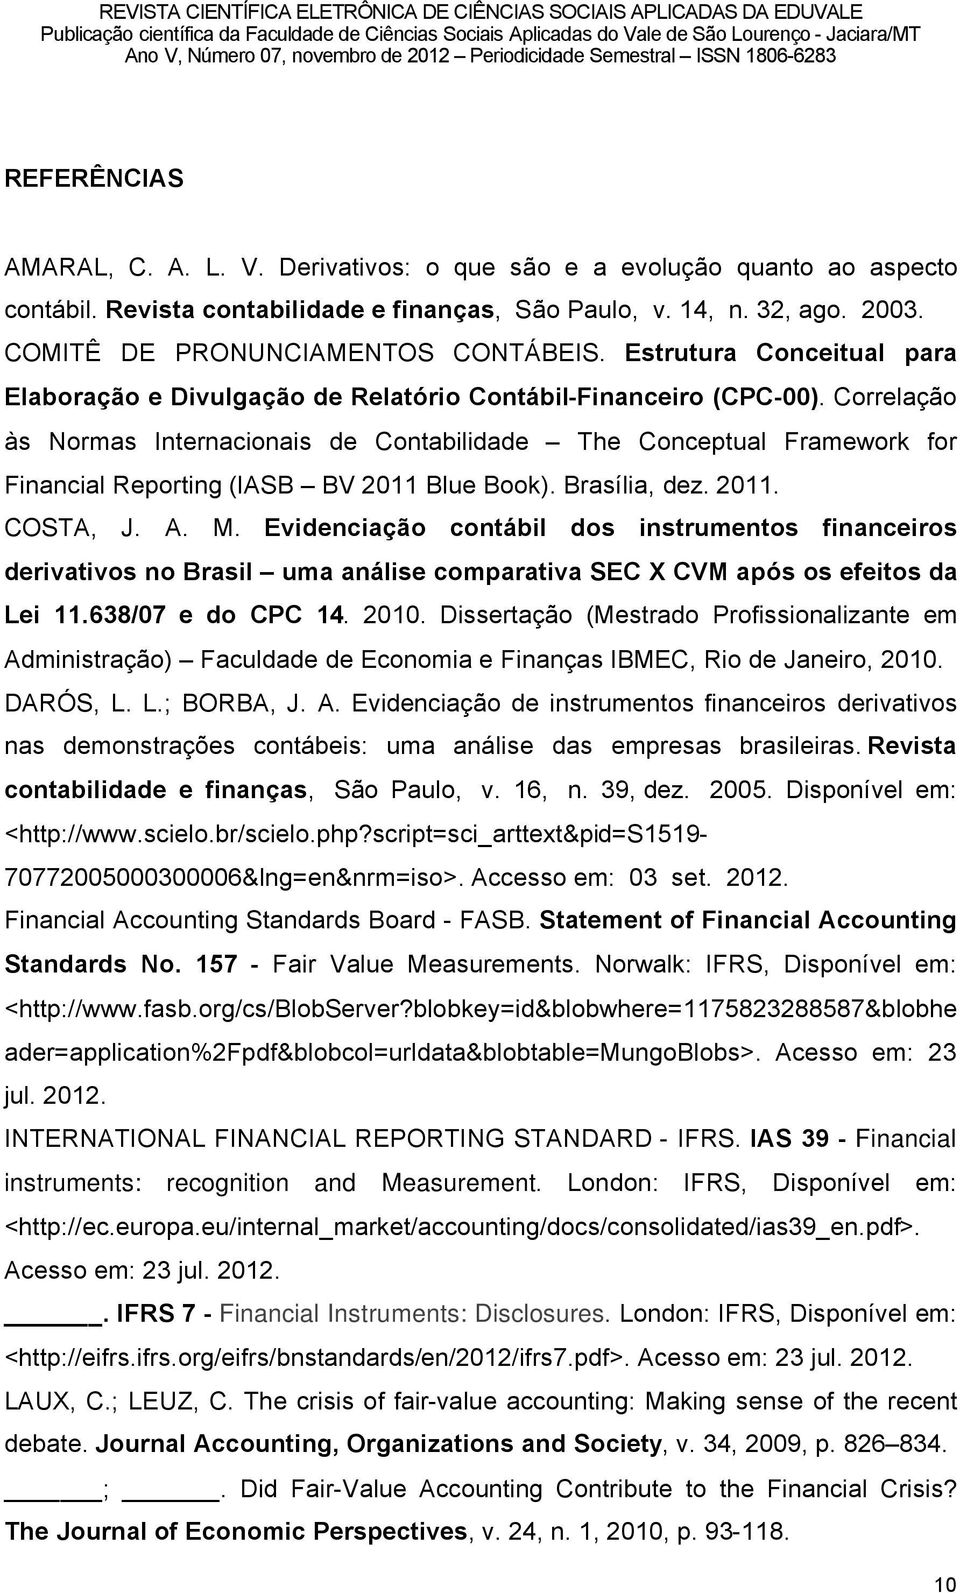 CorrelaÉÑo ís Normas Internacionais de Contabilidade The Conceptual Framework for Financial Reporting (IASB BV 2011 Blue Book). BrasÖlia, dez. 2011. COSTA, J. A. M.